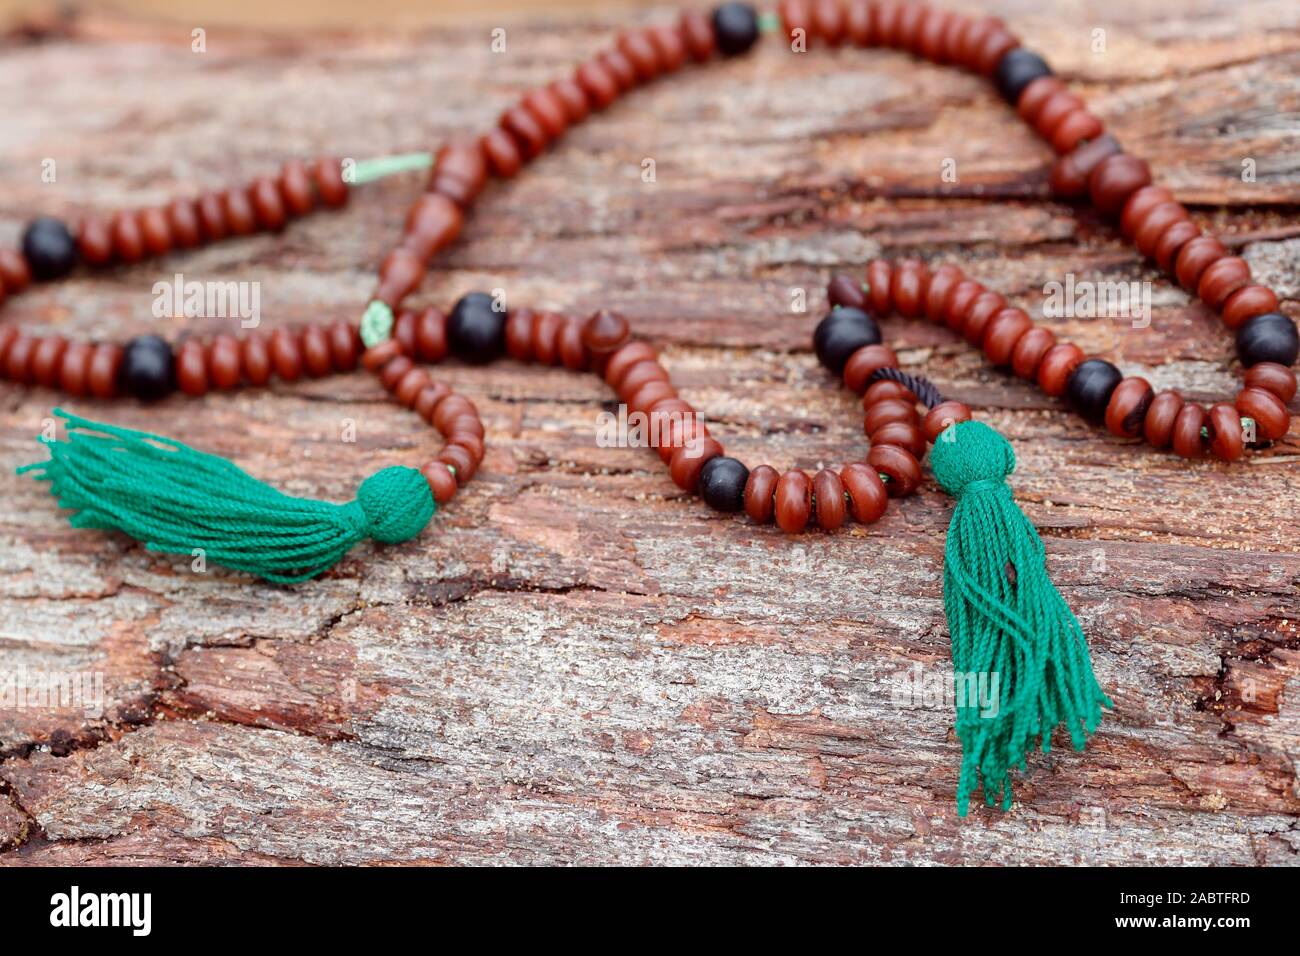 Muslim wooden prayer beads on a trunk. Stock Photo